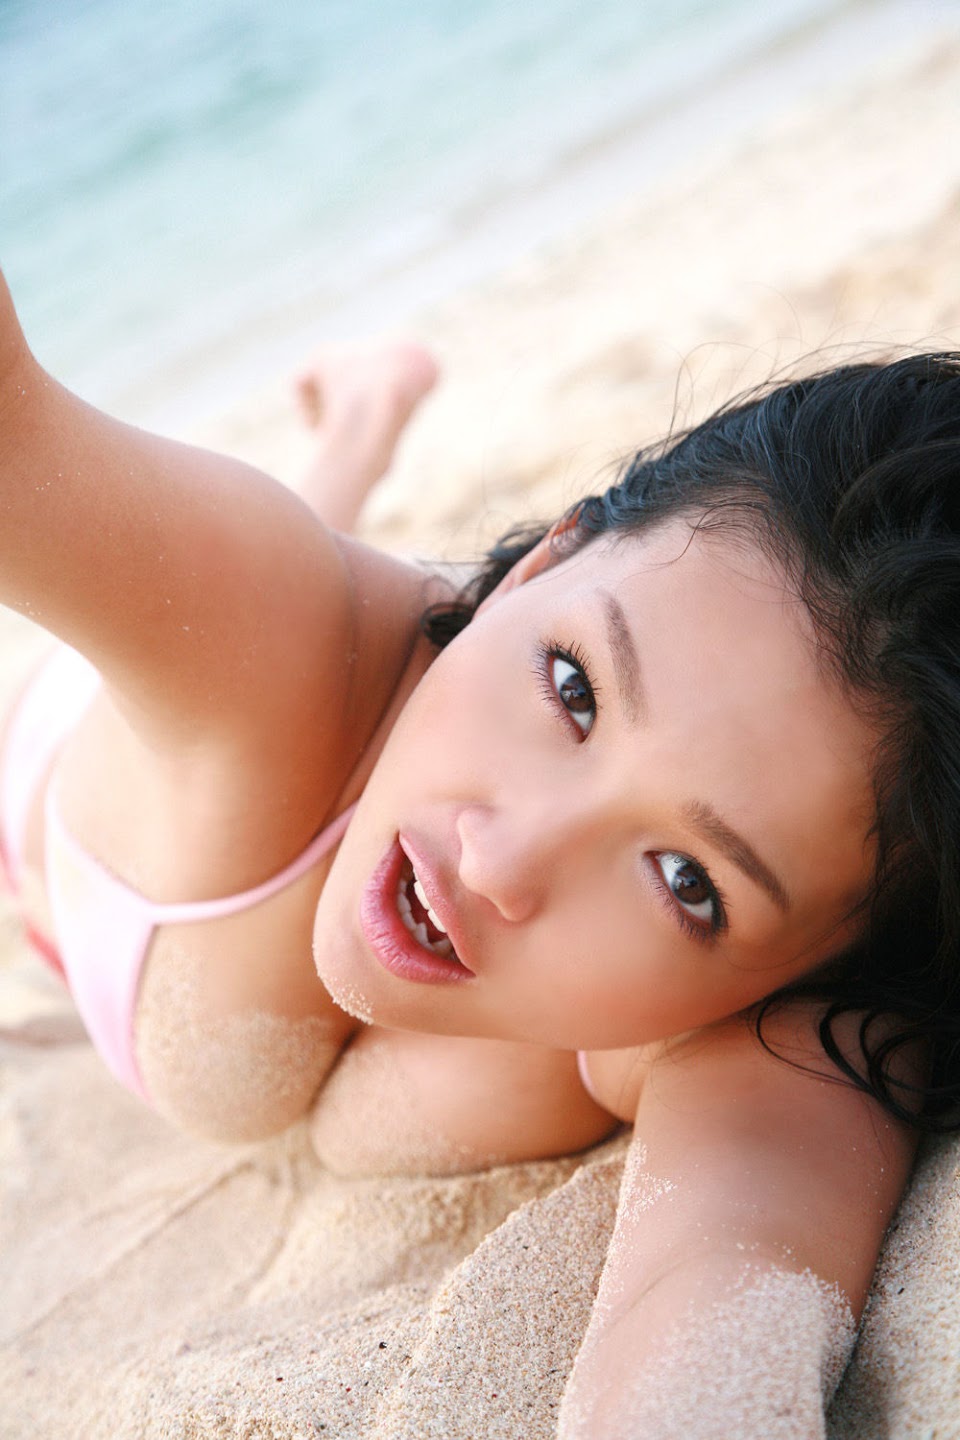 Reon-Kadena-sexy-girls-gooogirl.com-3648.300586